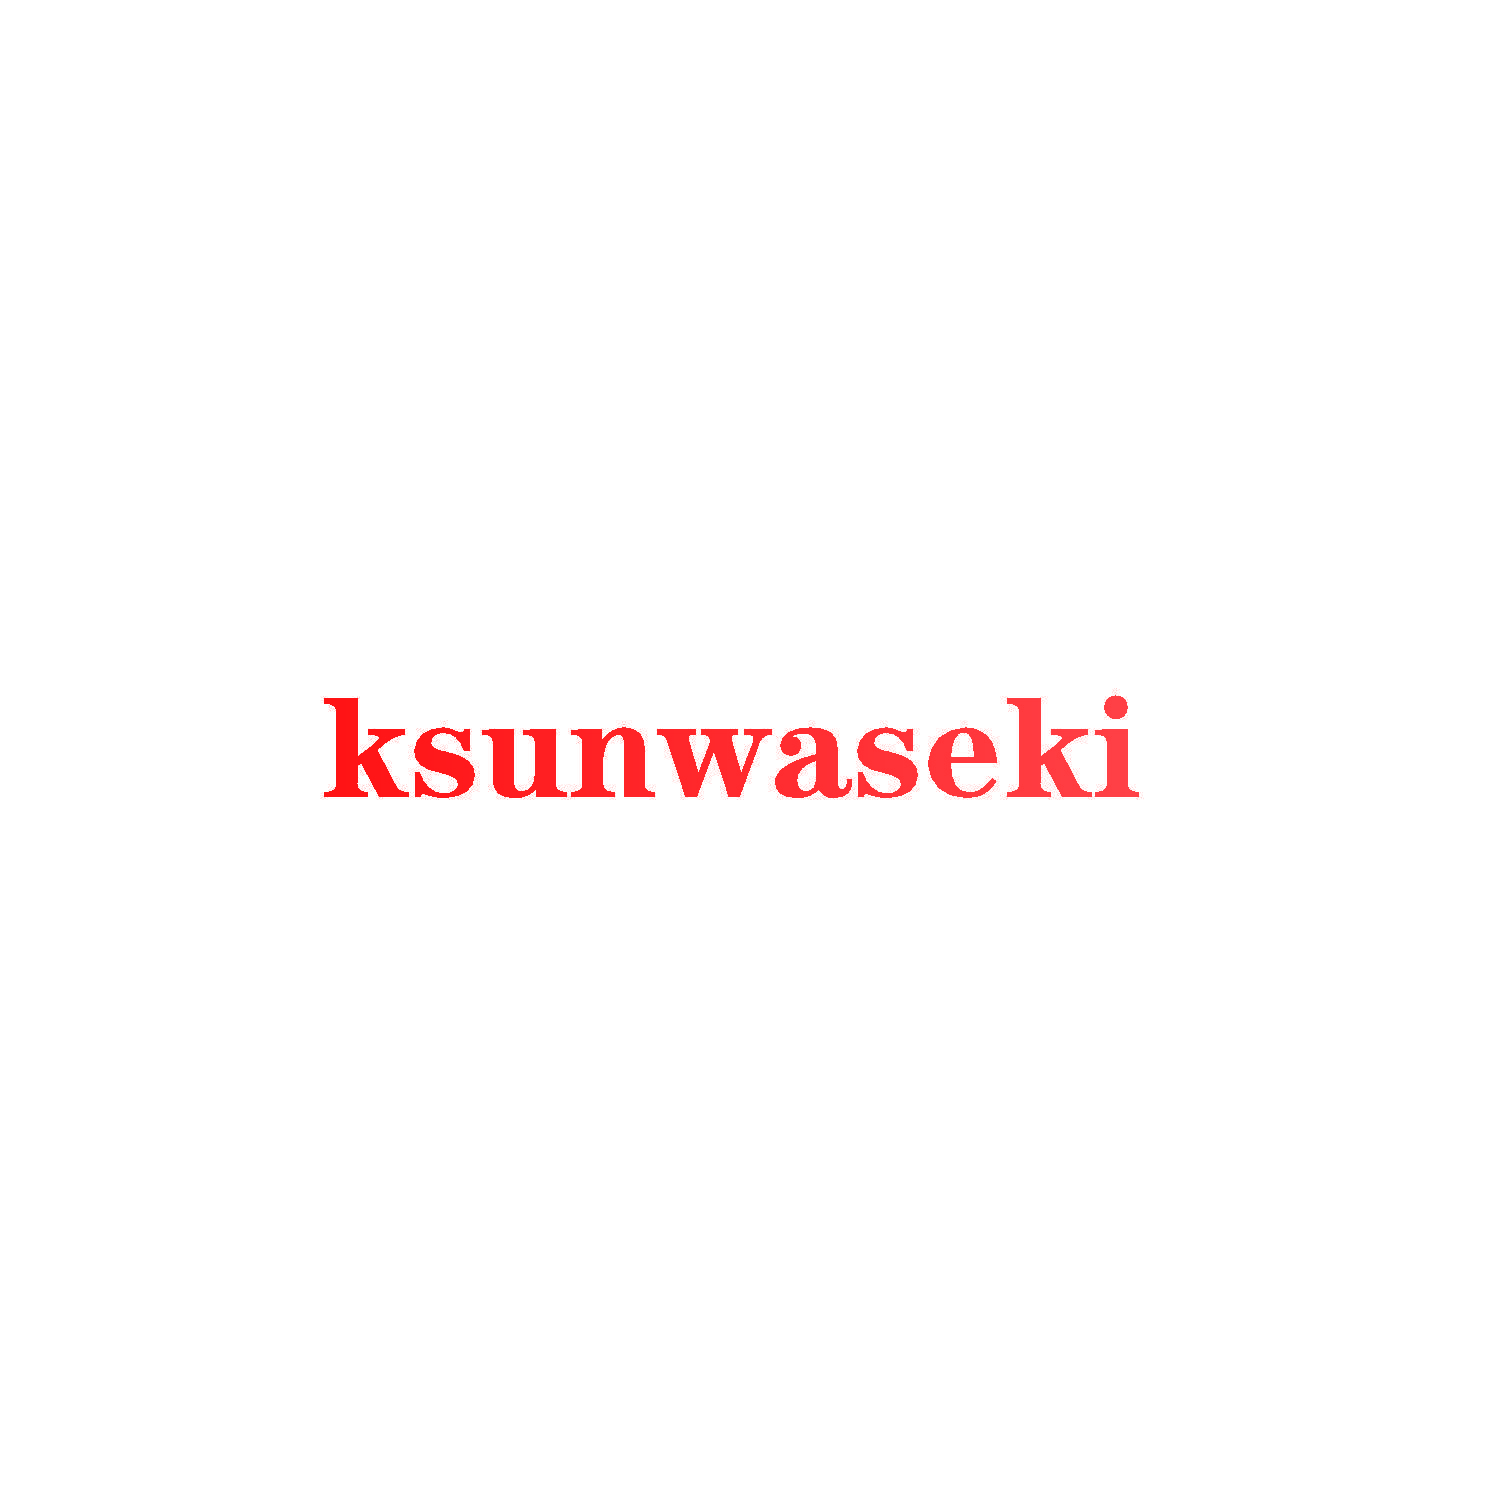 ksunwaseki